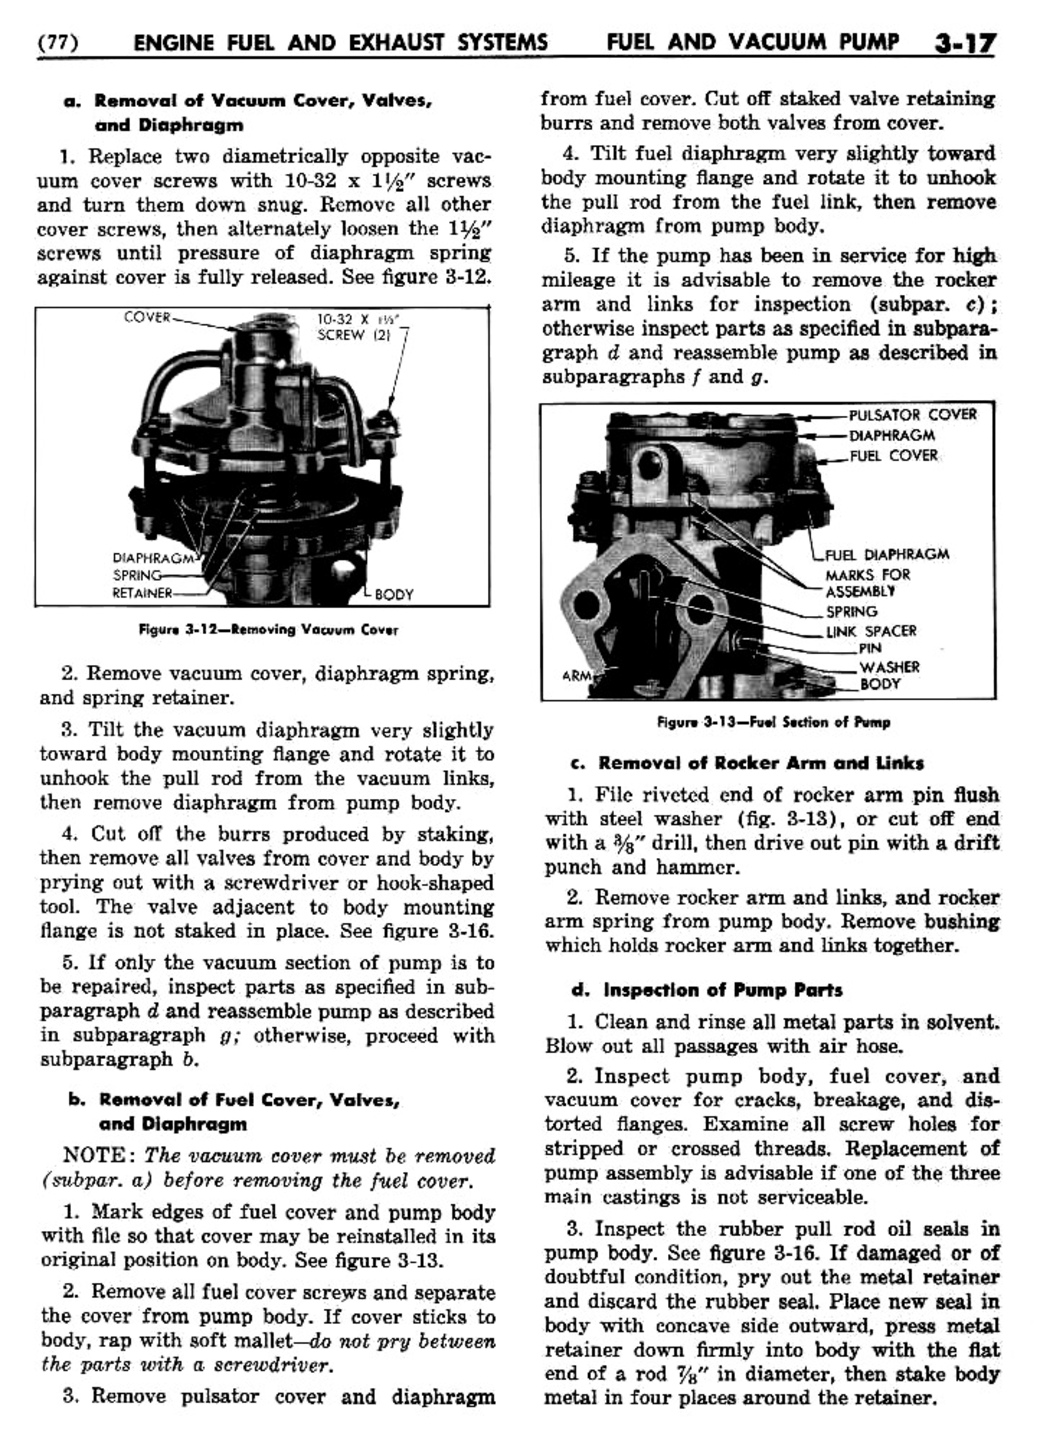 n_04 1955 Buick Shop Manual - Engine Fuel & Exhaust-017-017.jpg